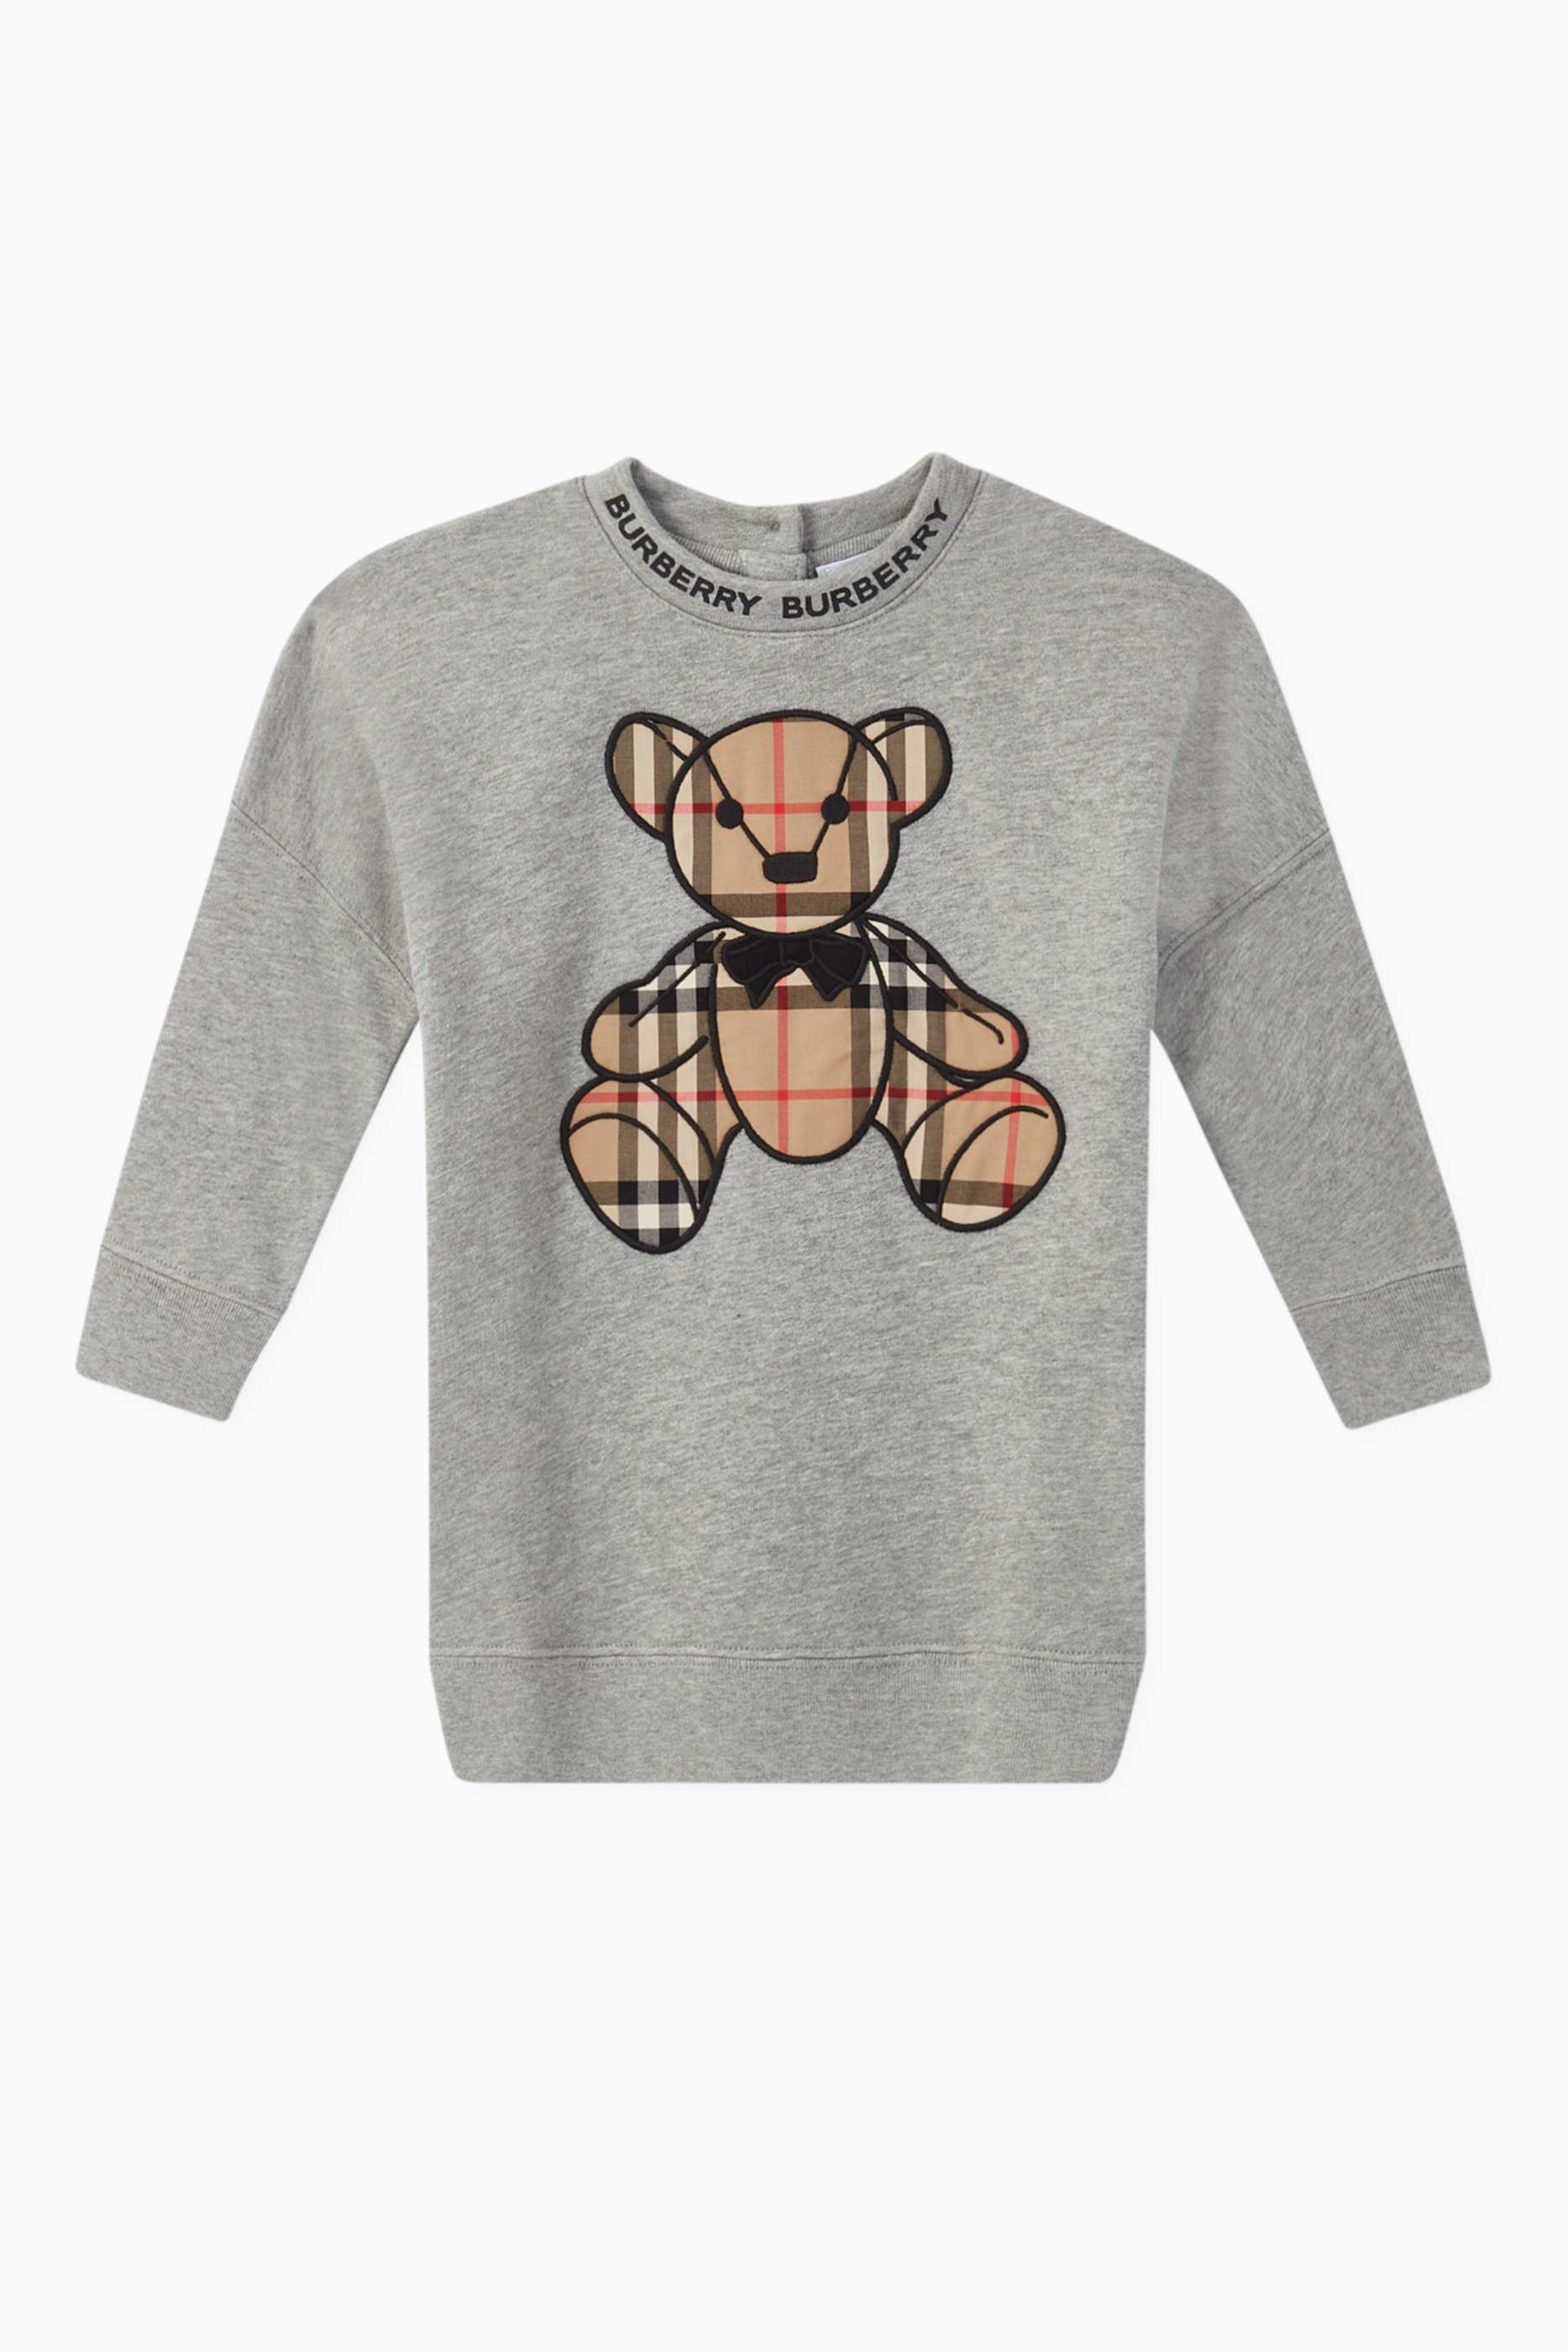 Shop Burberry Grey Thomas Bear Appliqué Cotton Sweater Dress for 